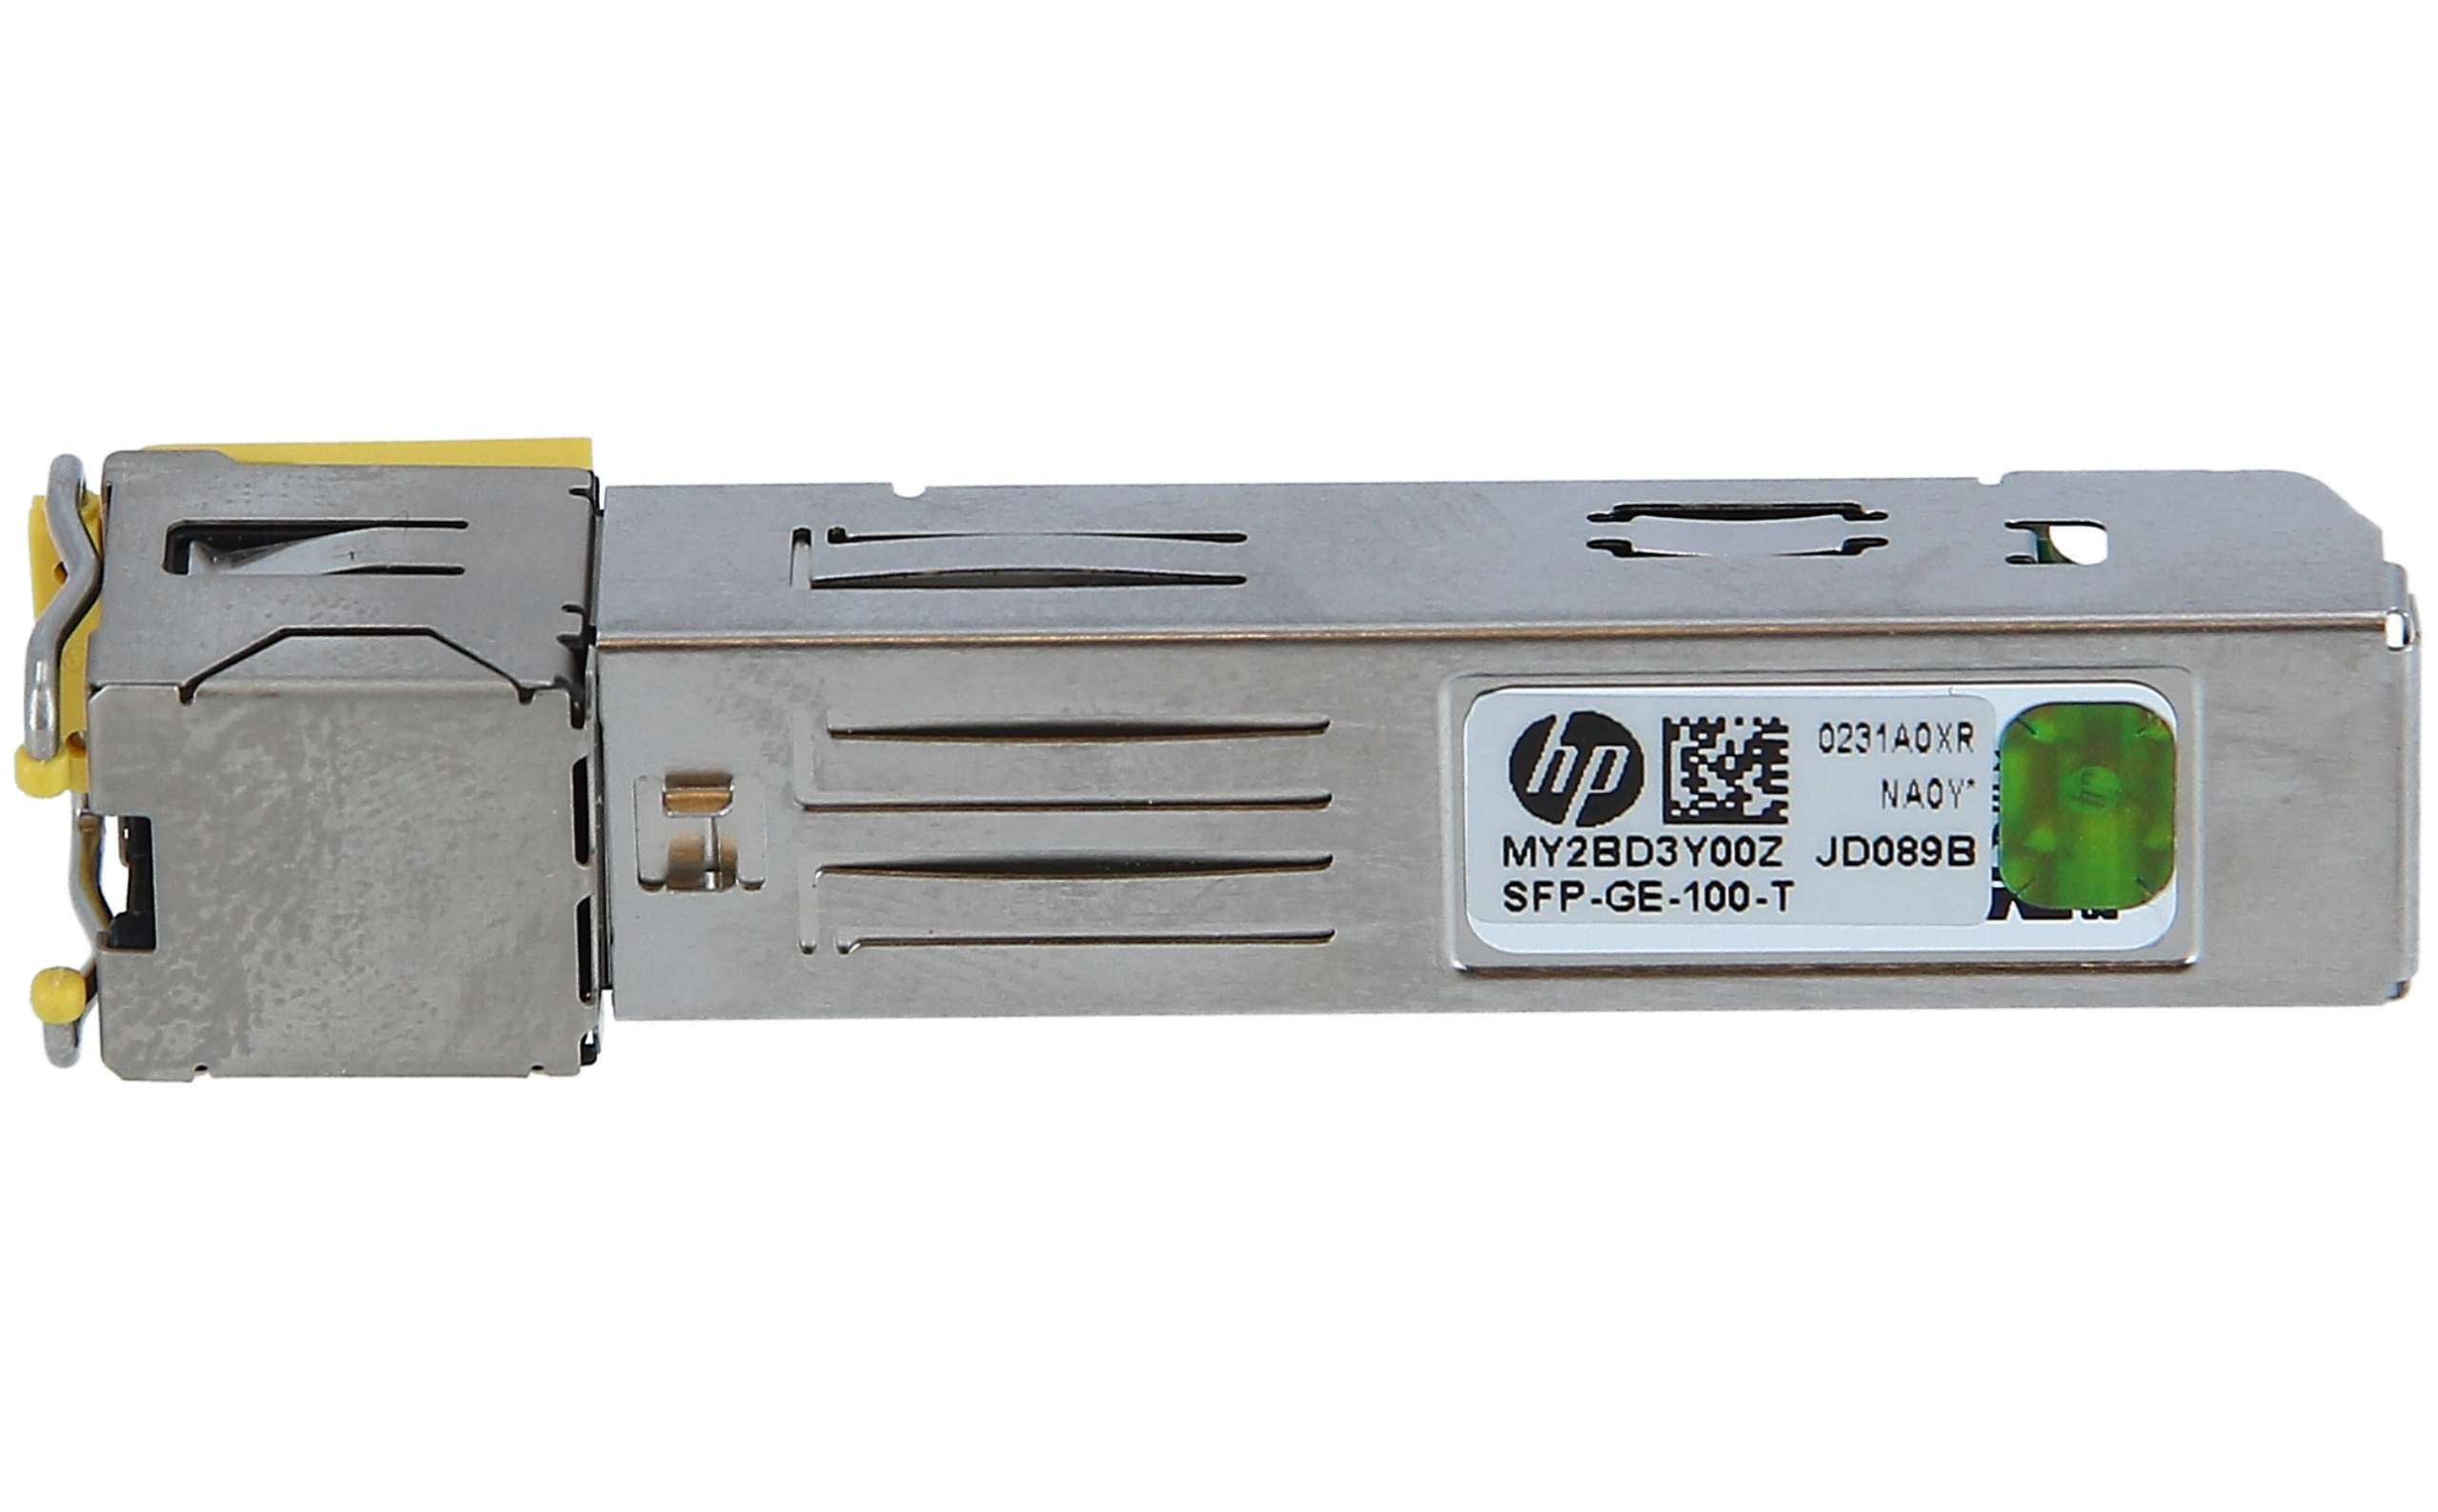 HPE - JD089B - X120 - SFP (mini-GBIC) transceiver module - GigE